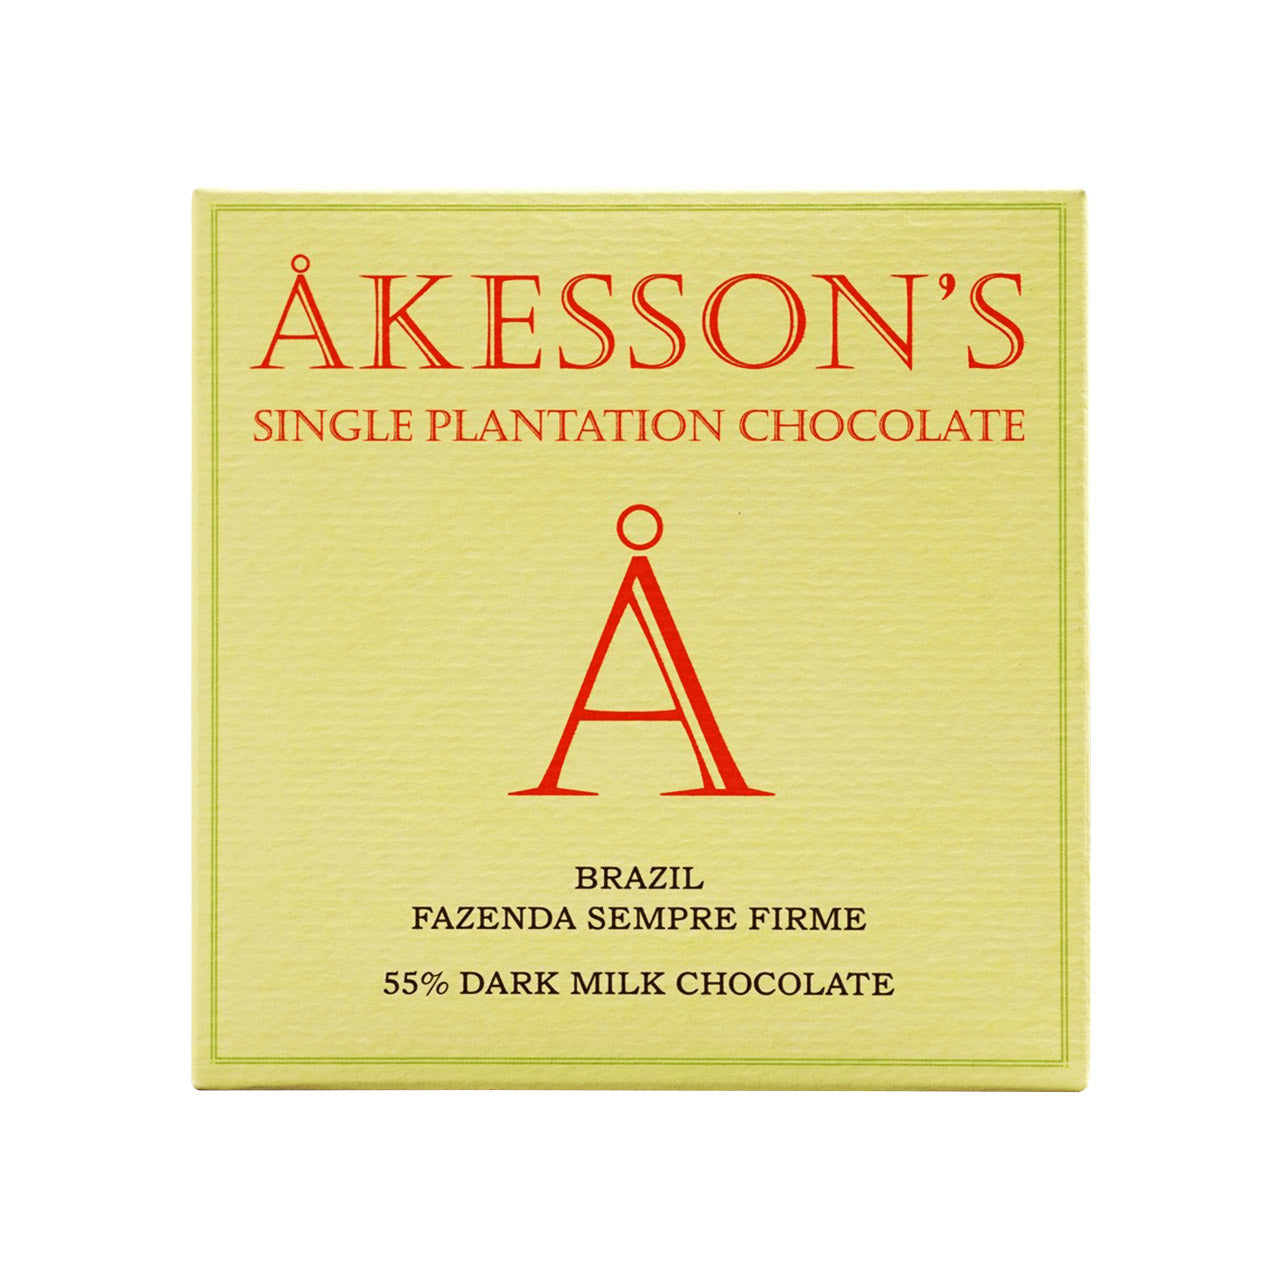 Akesson's Fazenda Sempre Firme, Brazil 55% Dark Milk